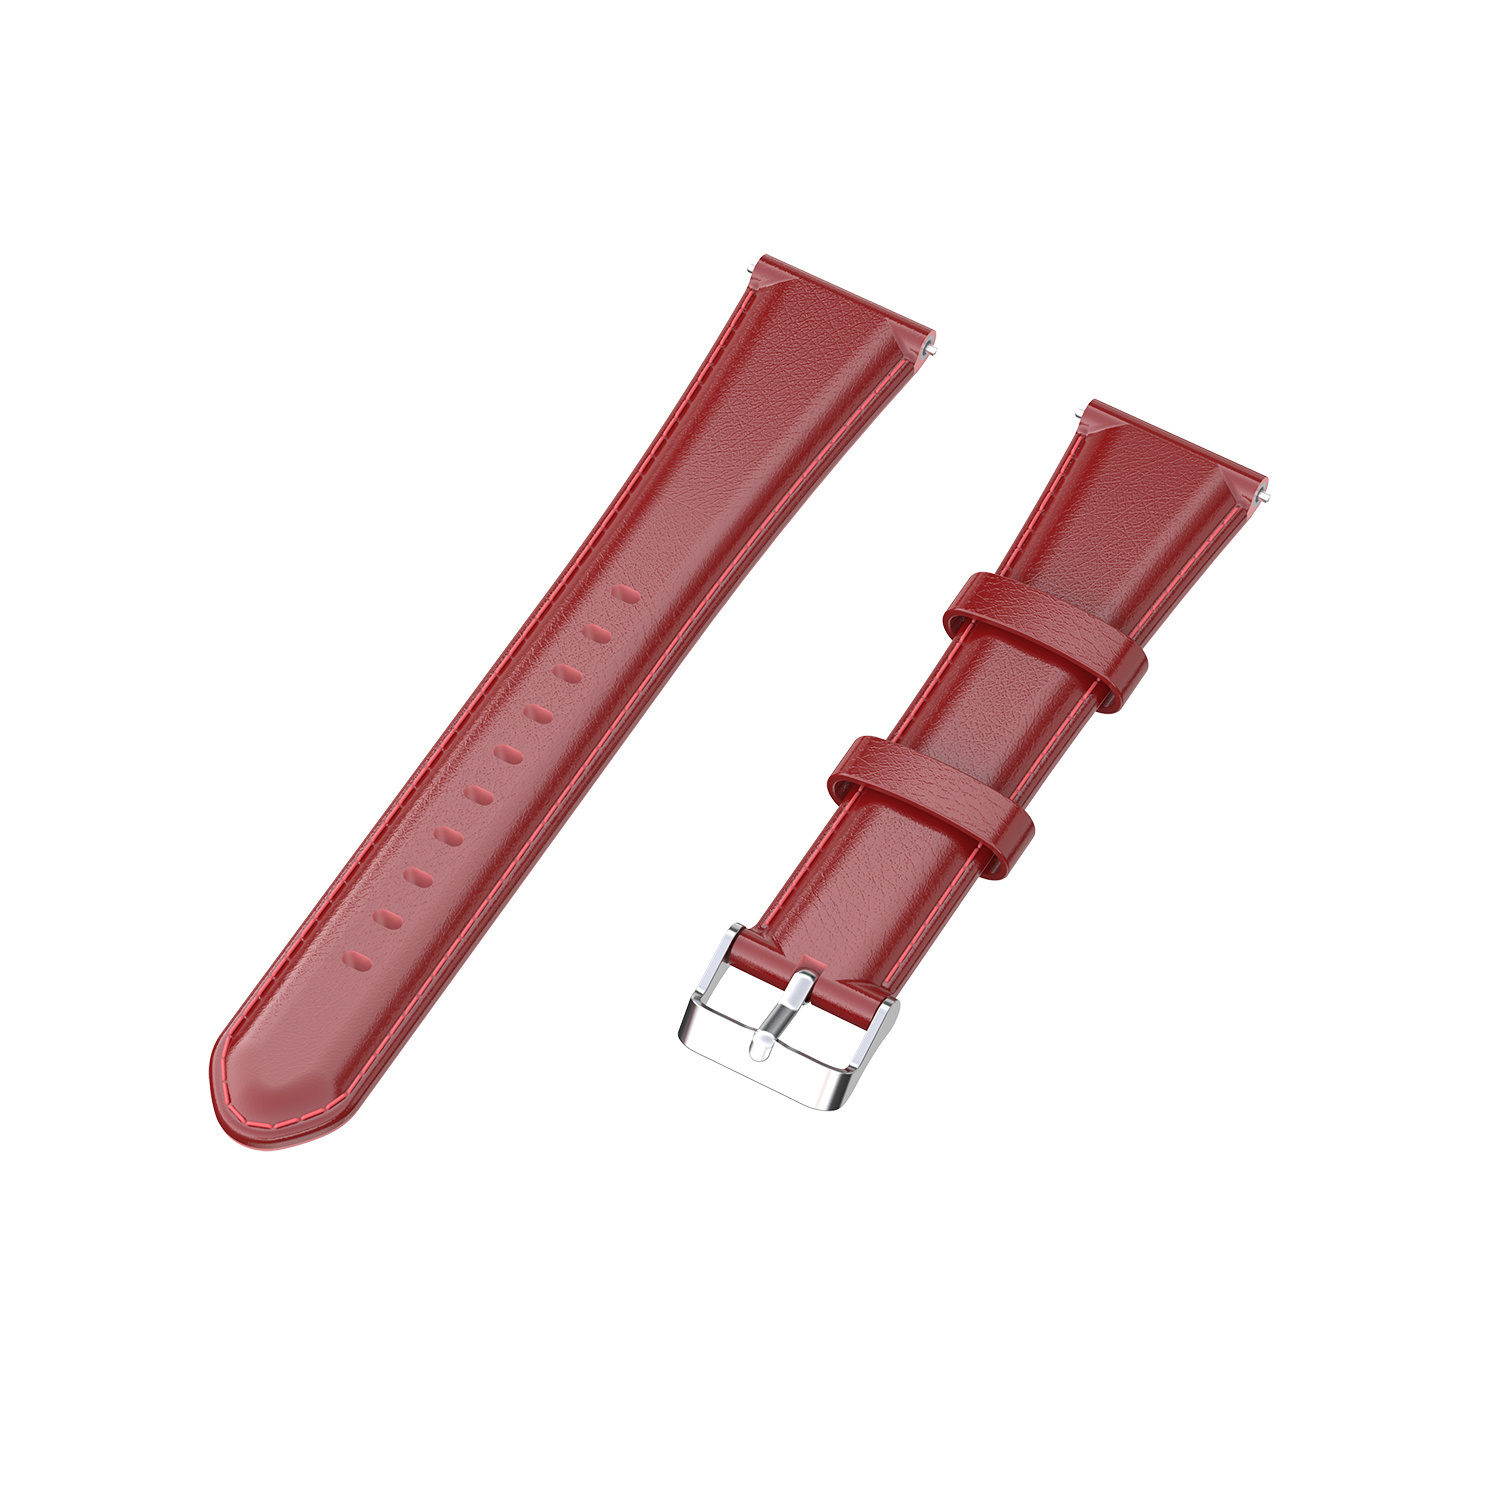 Cinturino in pelle per Samsung Galaxy Watch - rosso